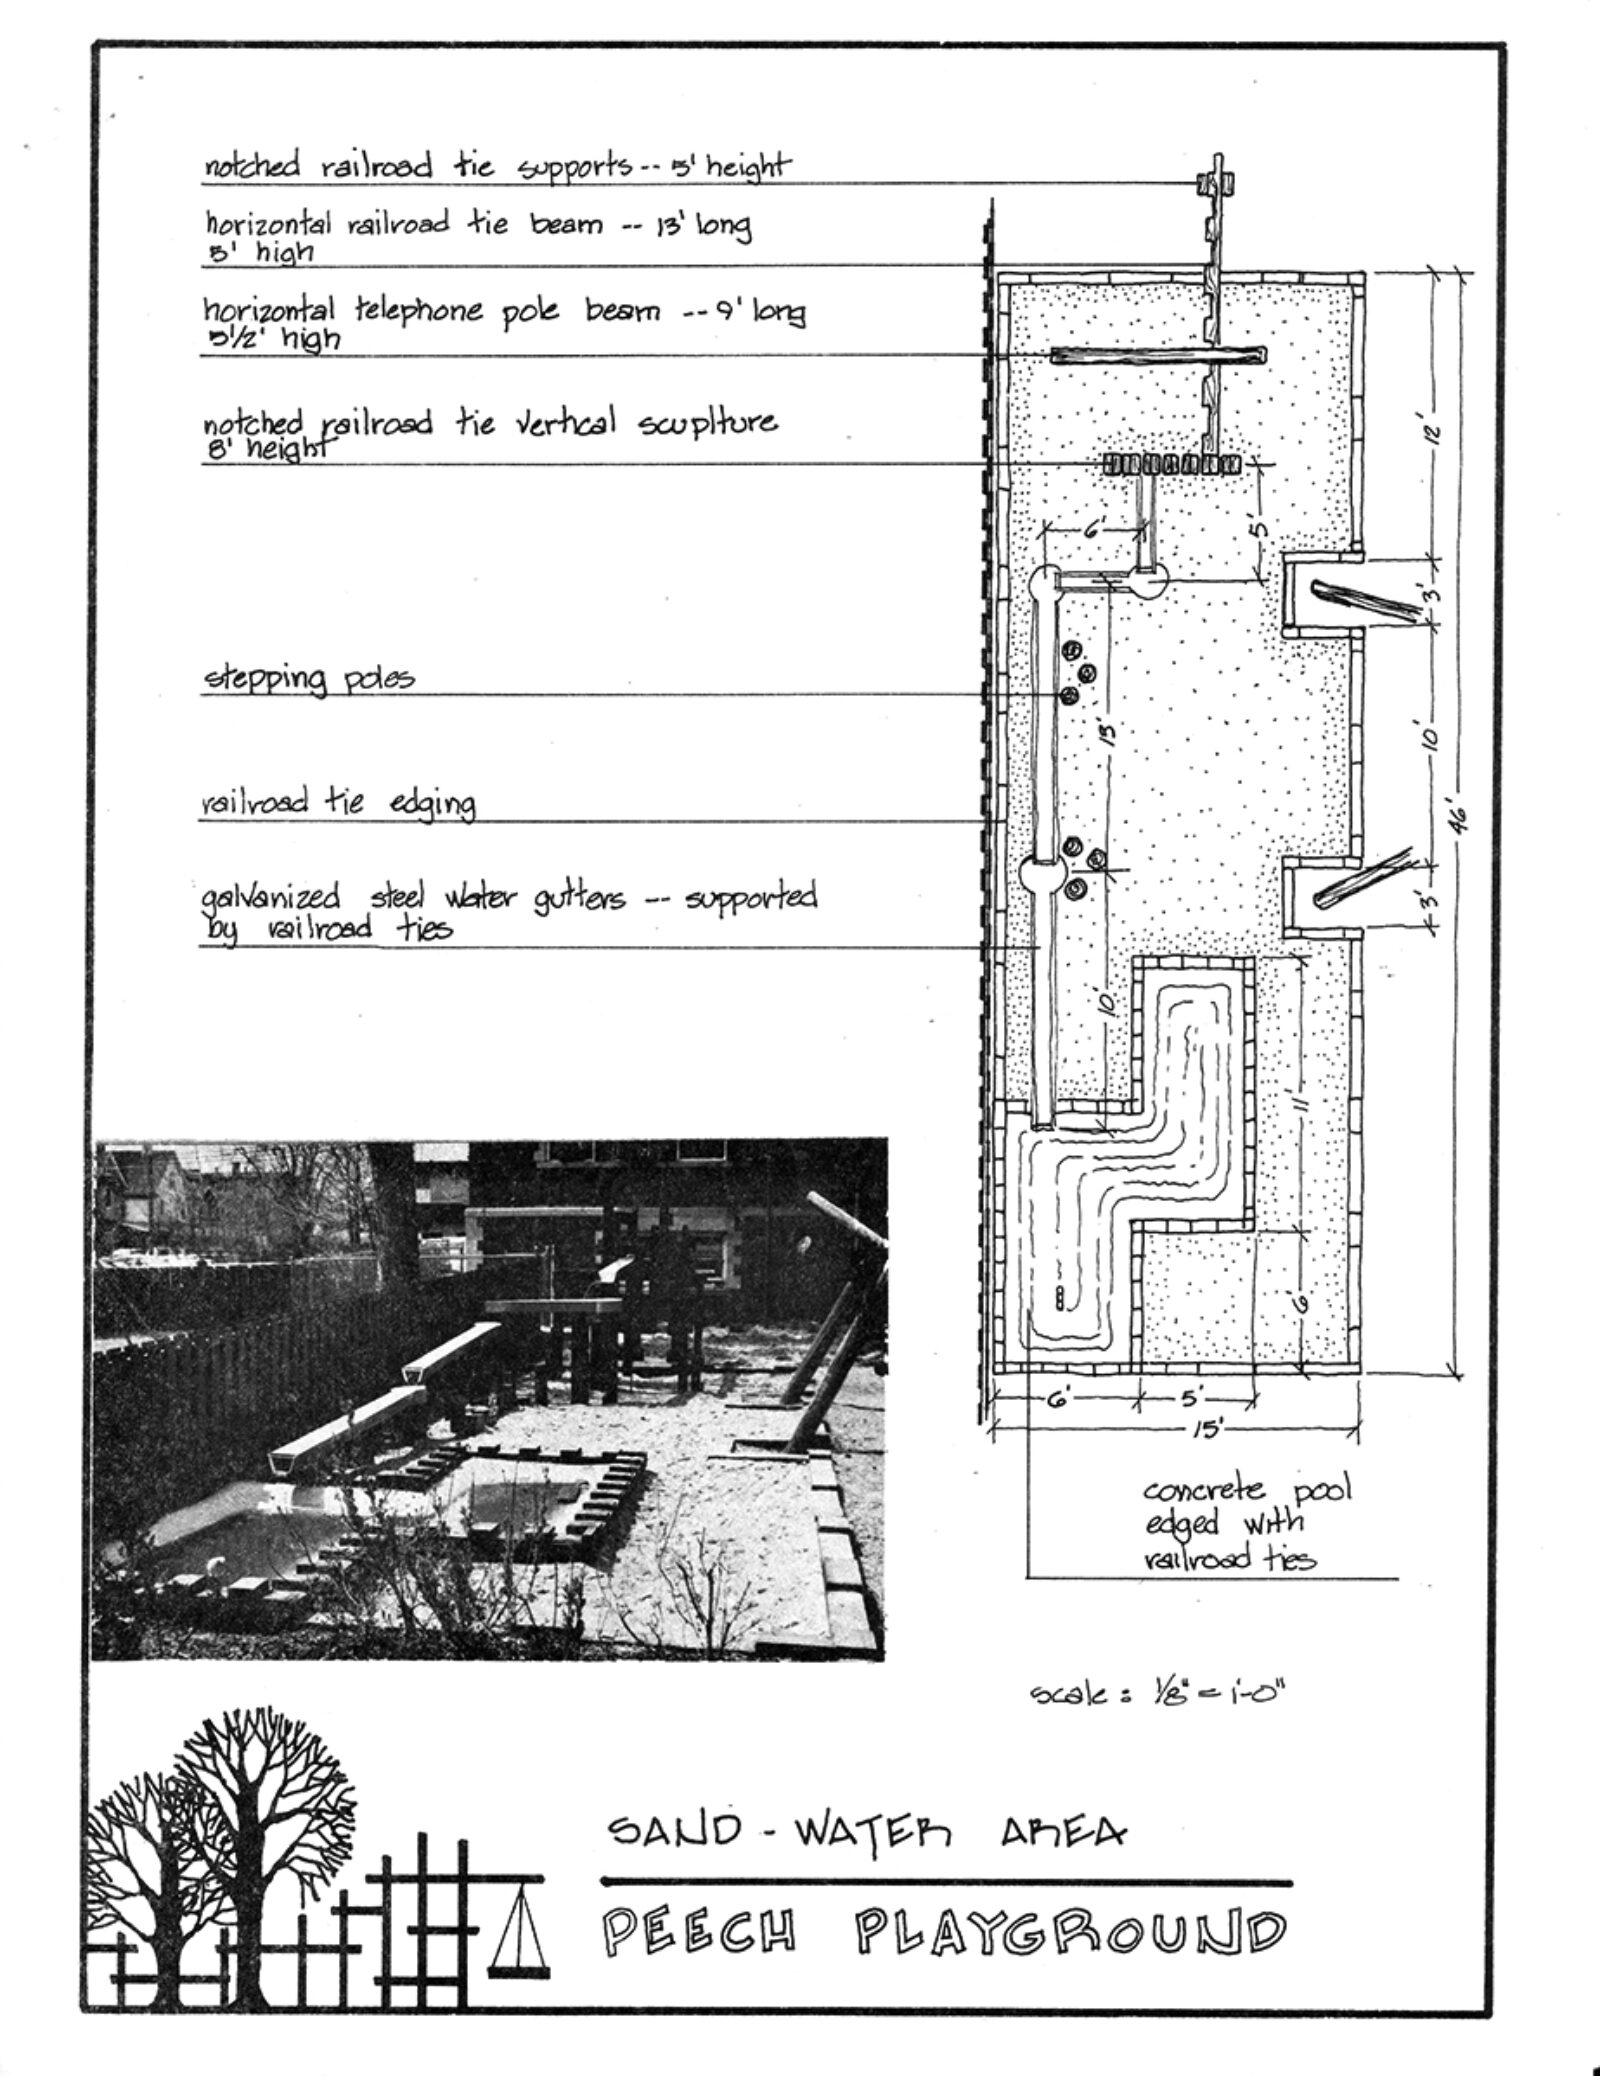 Plan of Peech Playground by Robert Zolomij (MLA 1970)